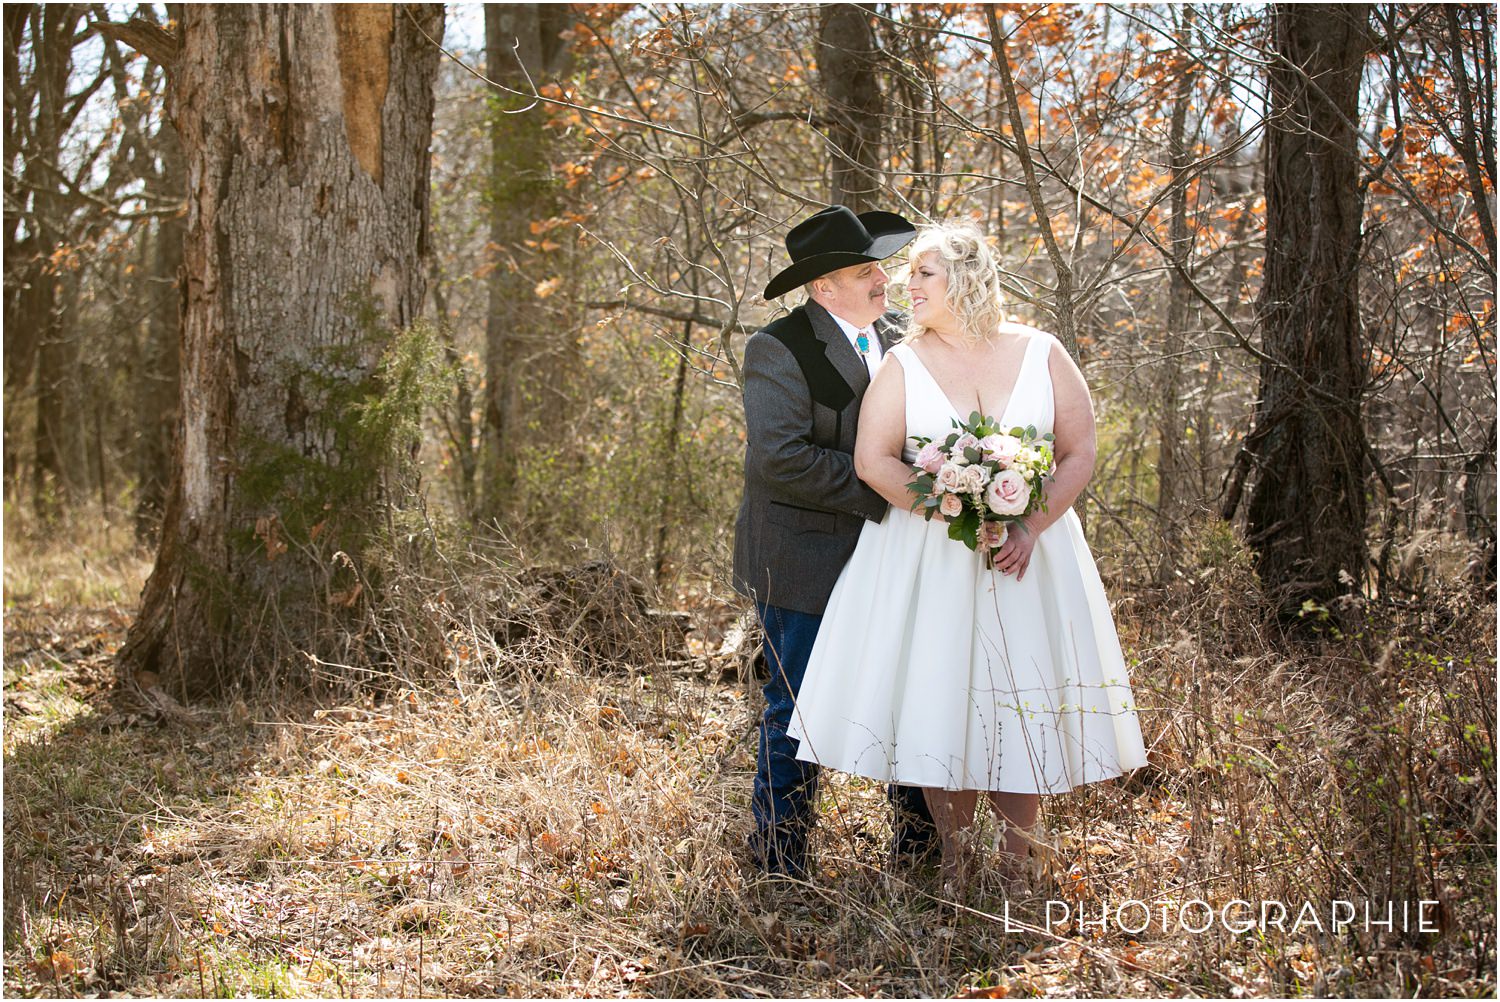 L Photographie St. Louis wedding photography Cedar Creek Lodge_0009.jpg